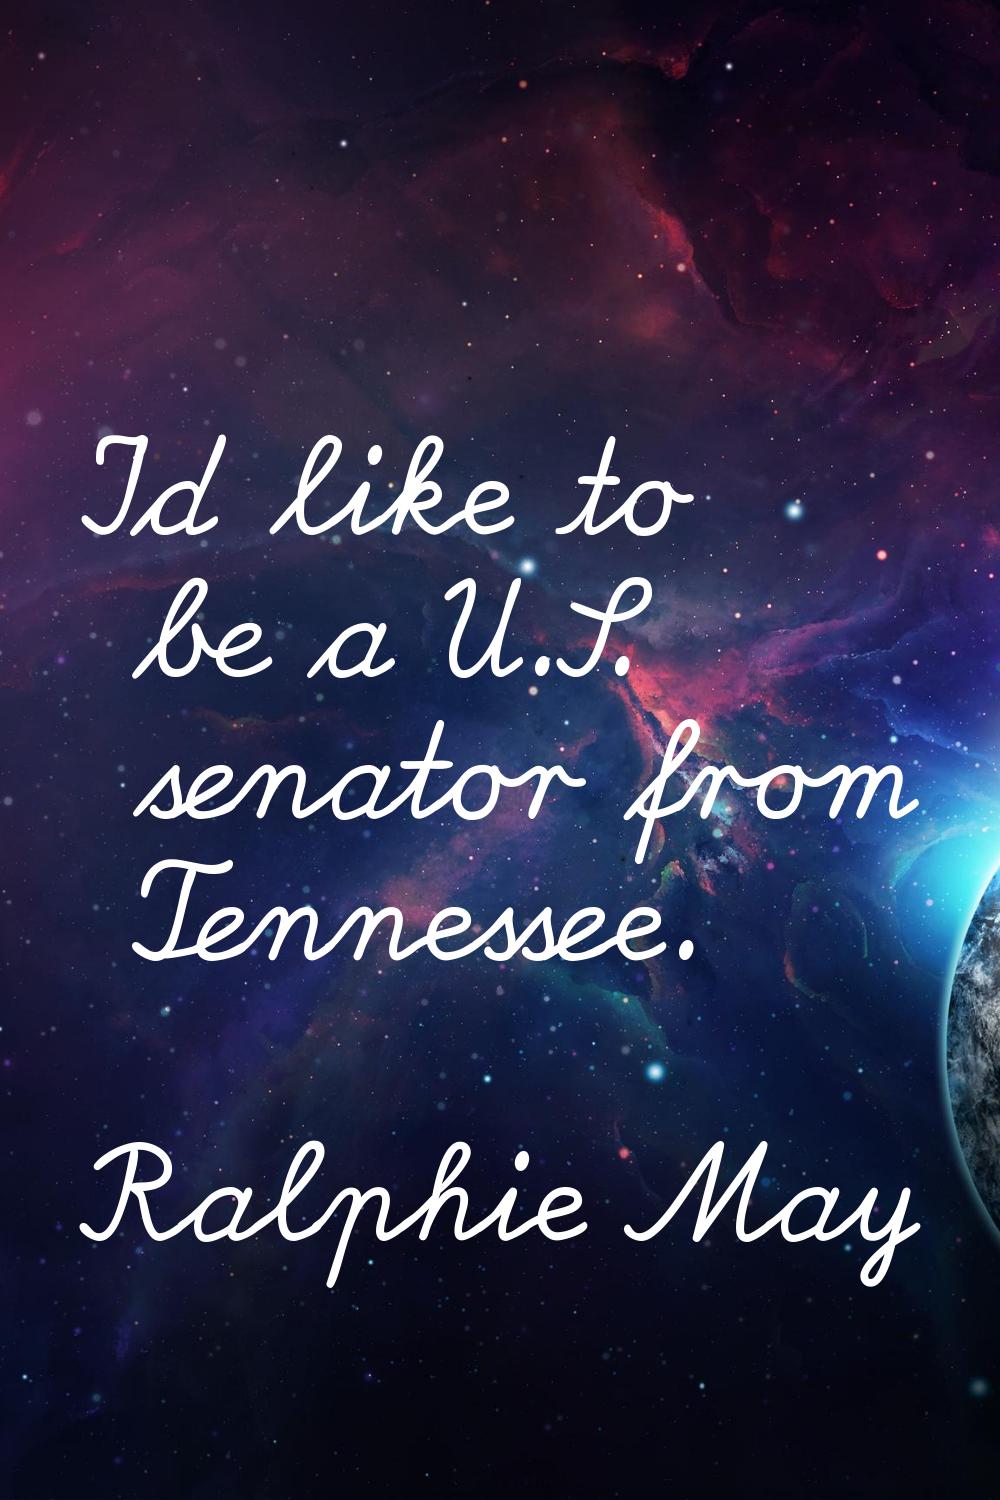 I'd like to be a U.S. senator from Tennessee.